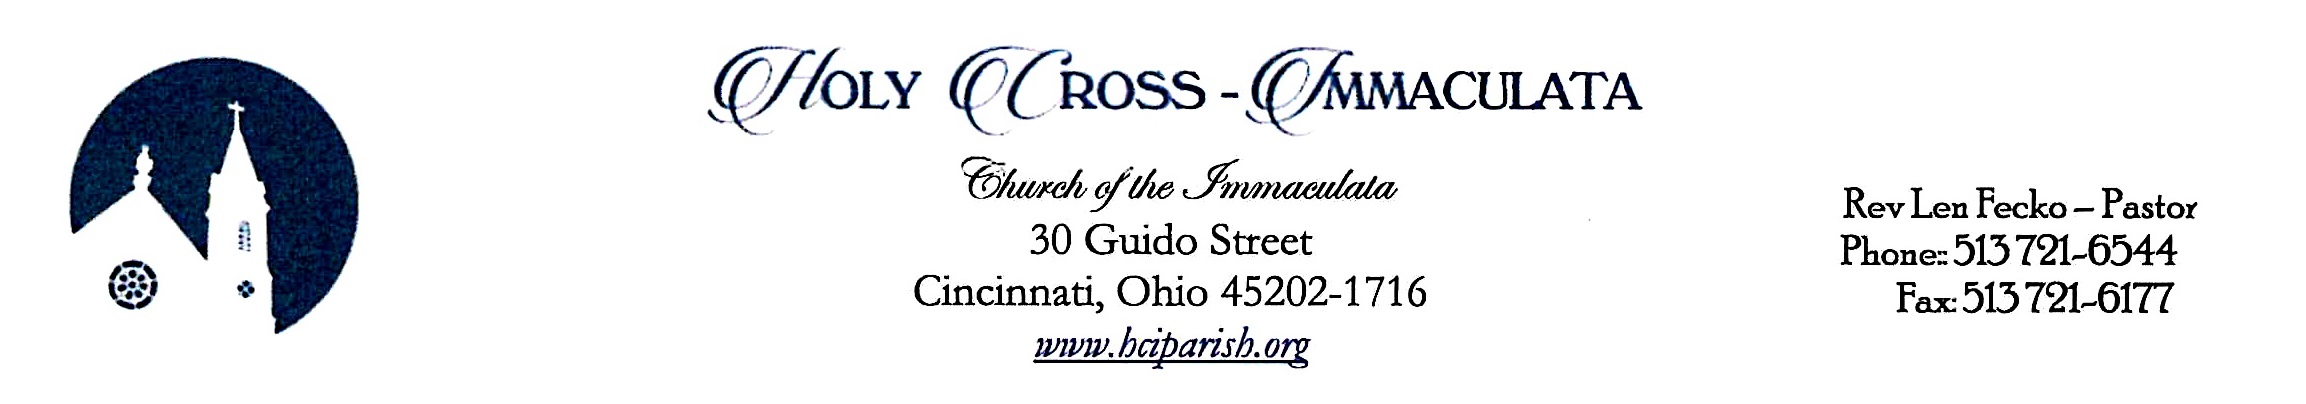 Holy Cross - Immaculata logo